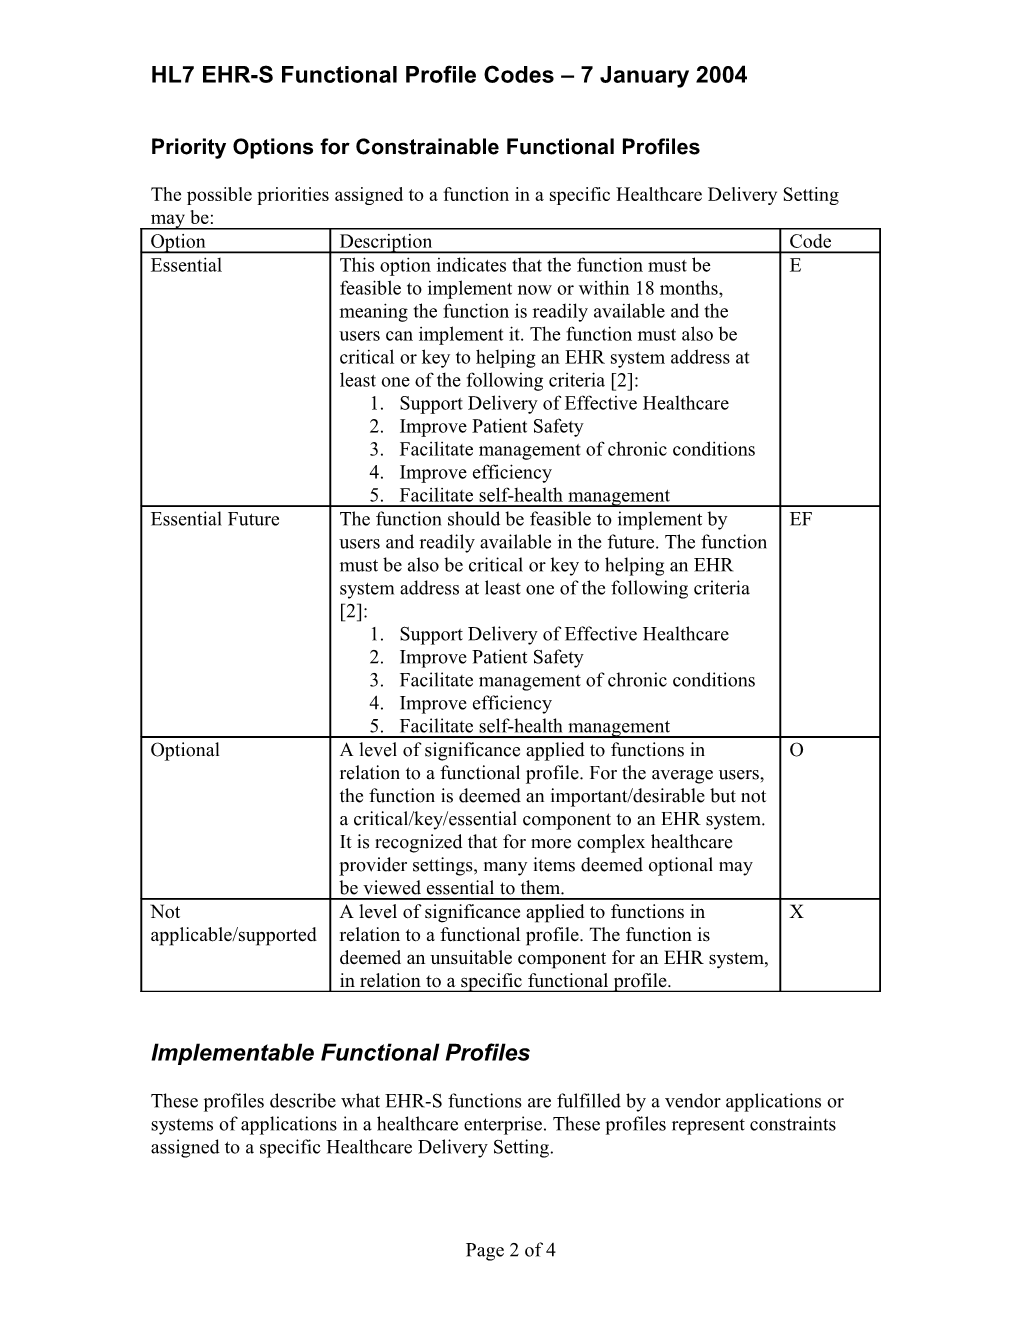 EHR-S Functional Profiles